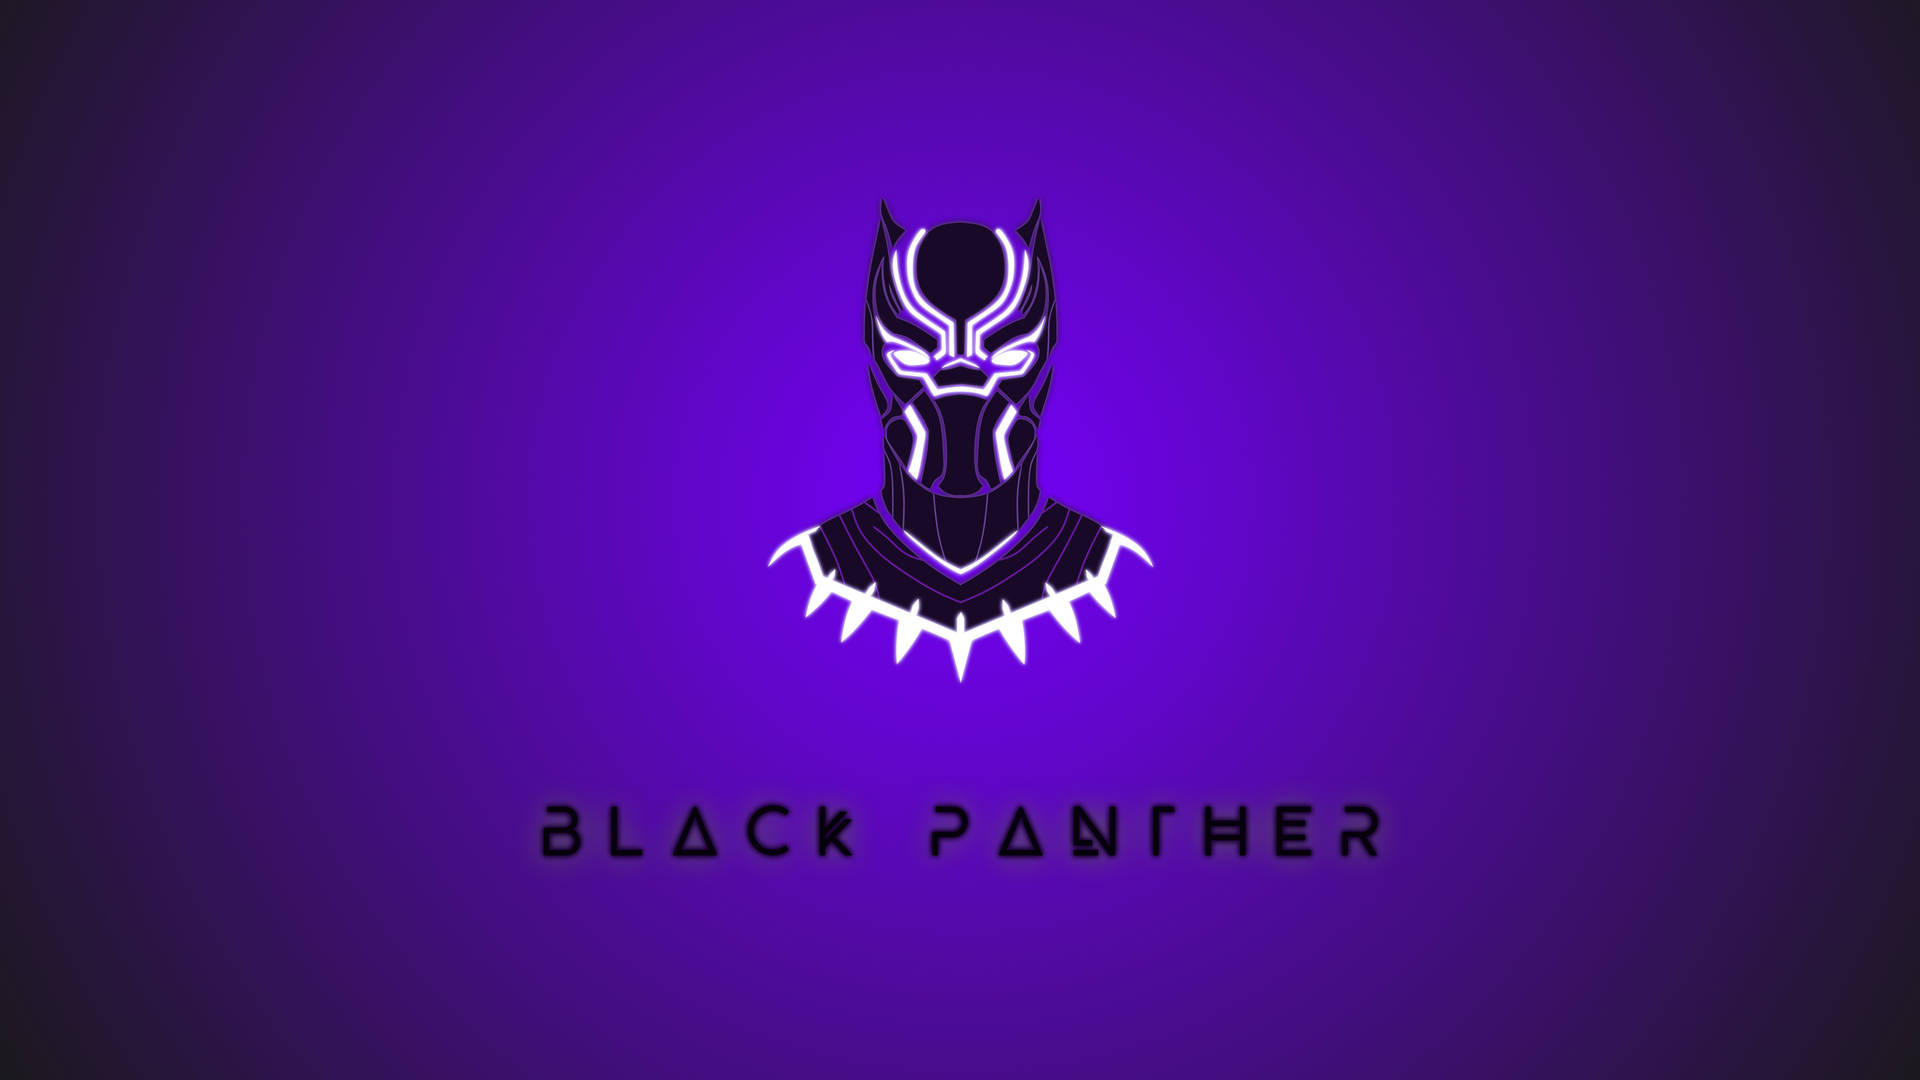 Black Panther 4k Ultra Hd Dark Graphic Art Wallpaper